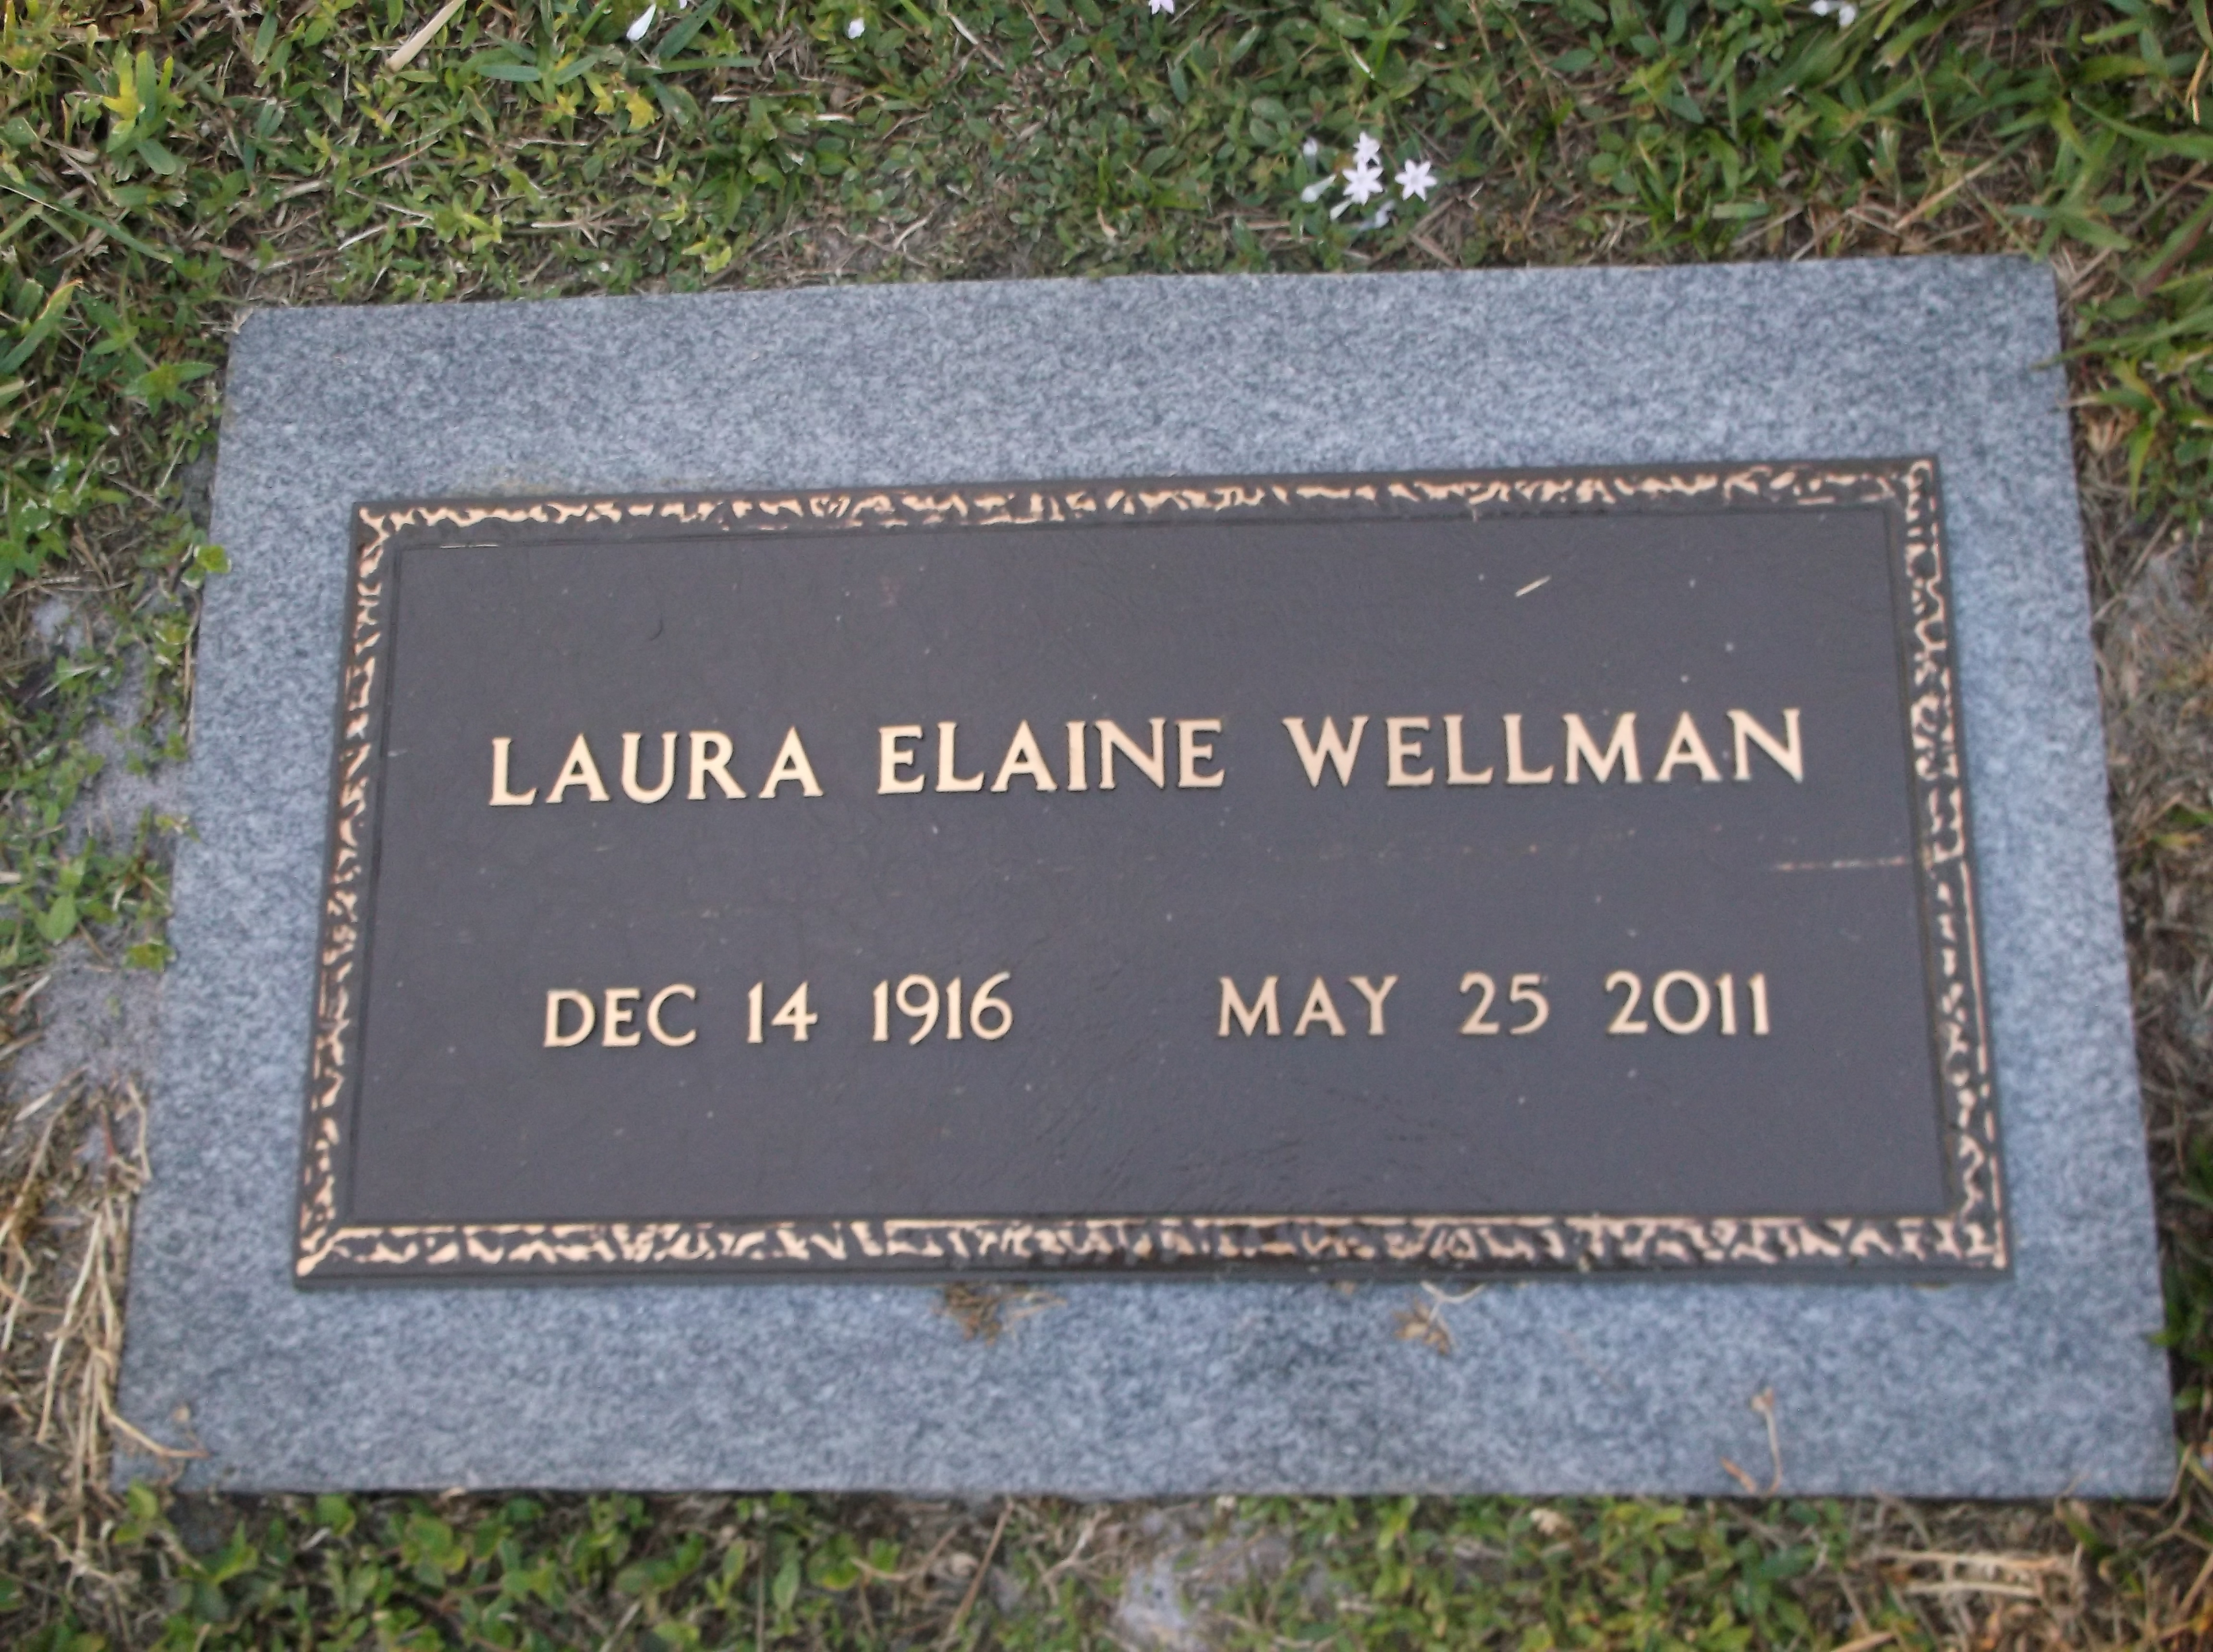 Laura Elaine Wellman